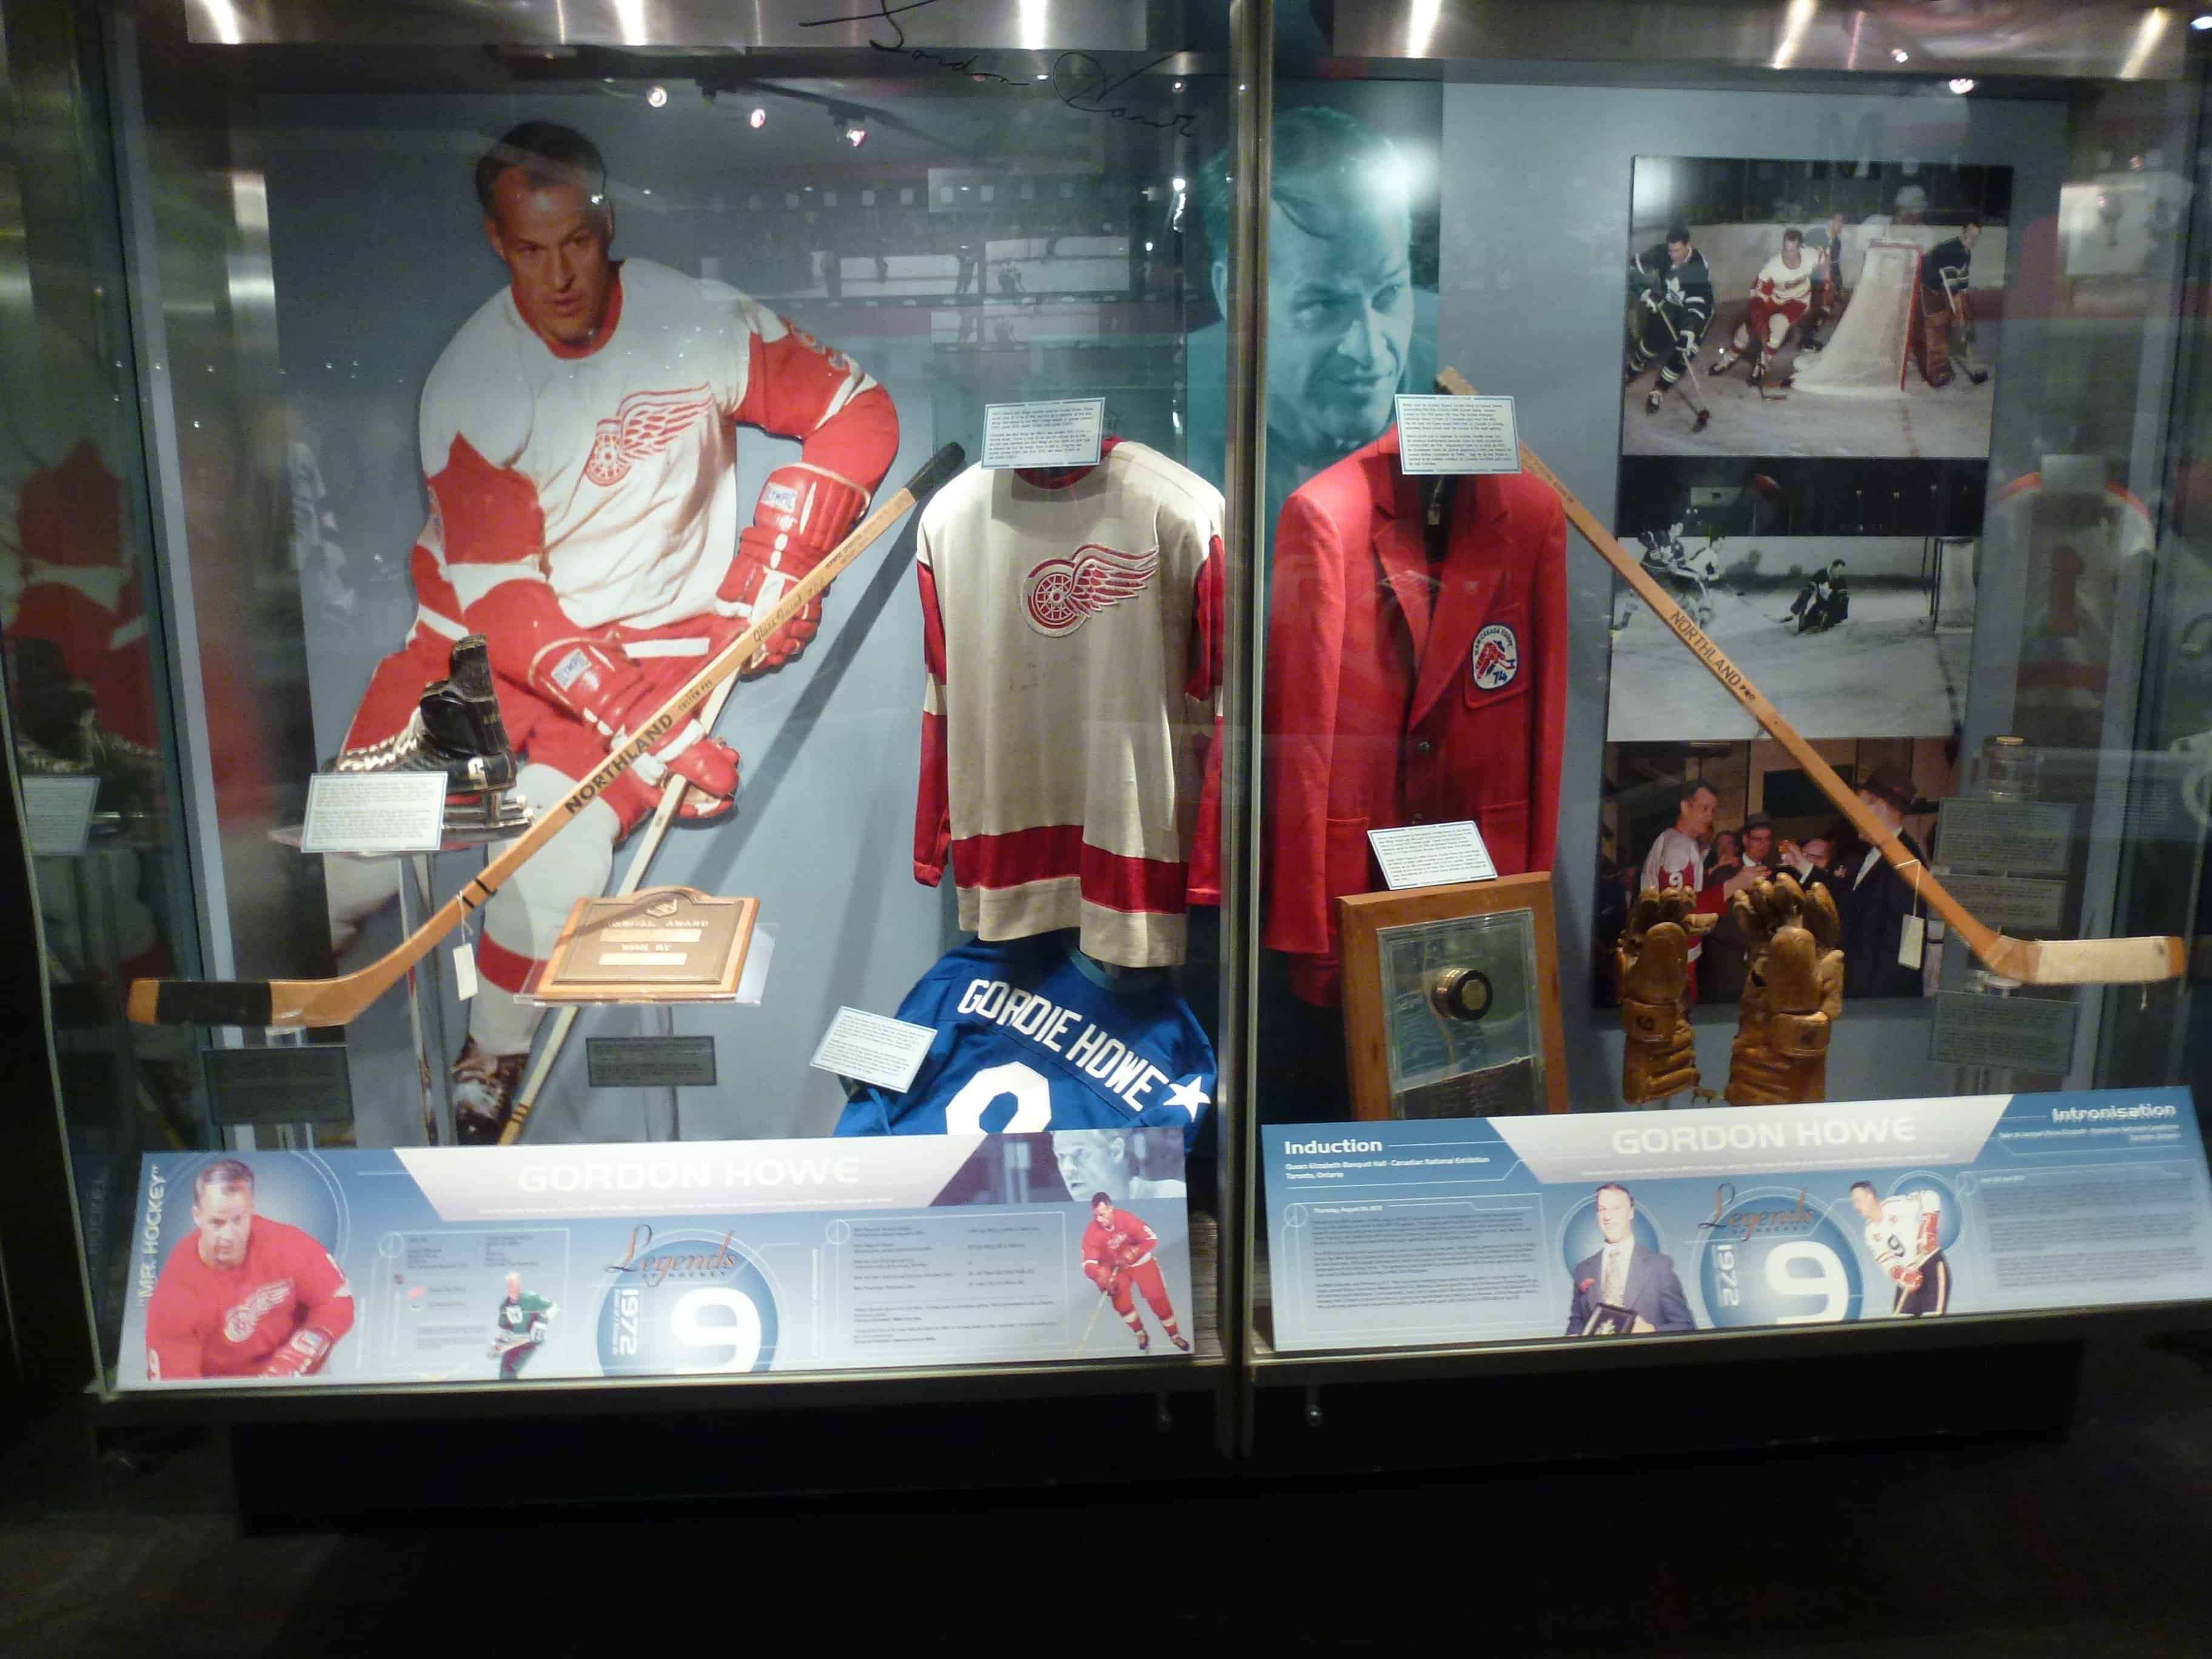 Gordie Howe display at the Hockey Hall of Fame in Toronto, Ontario, Canada